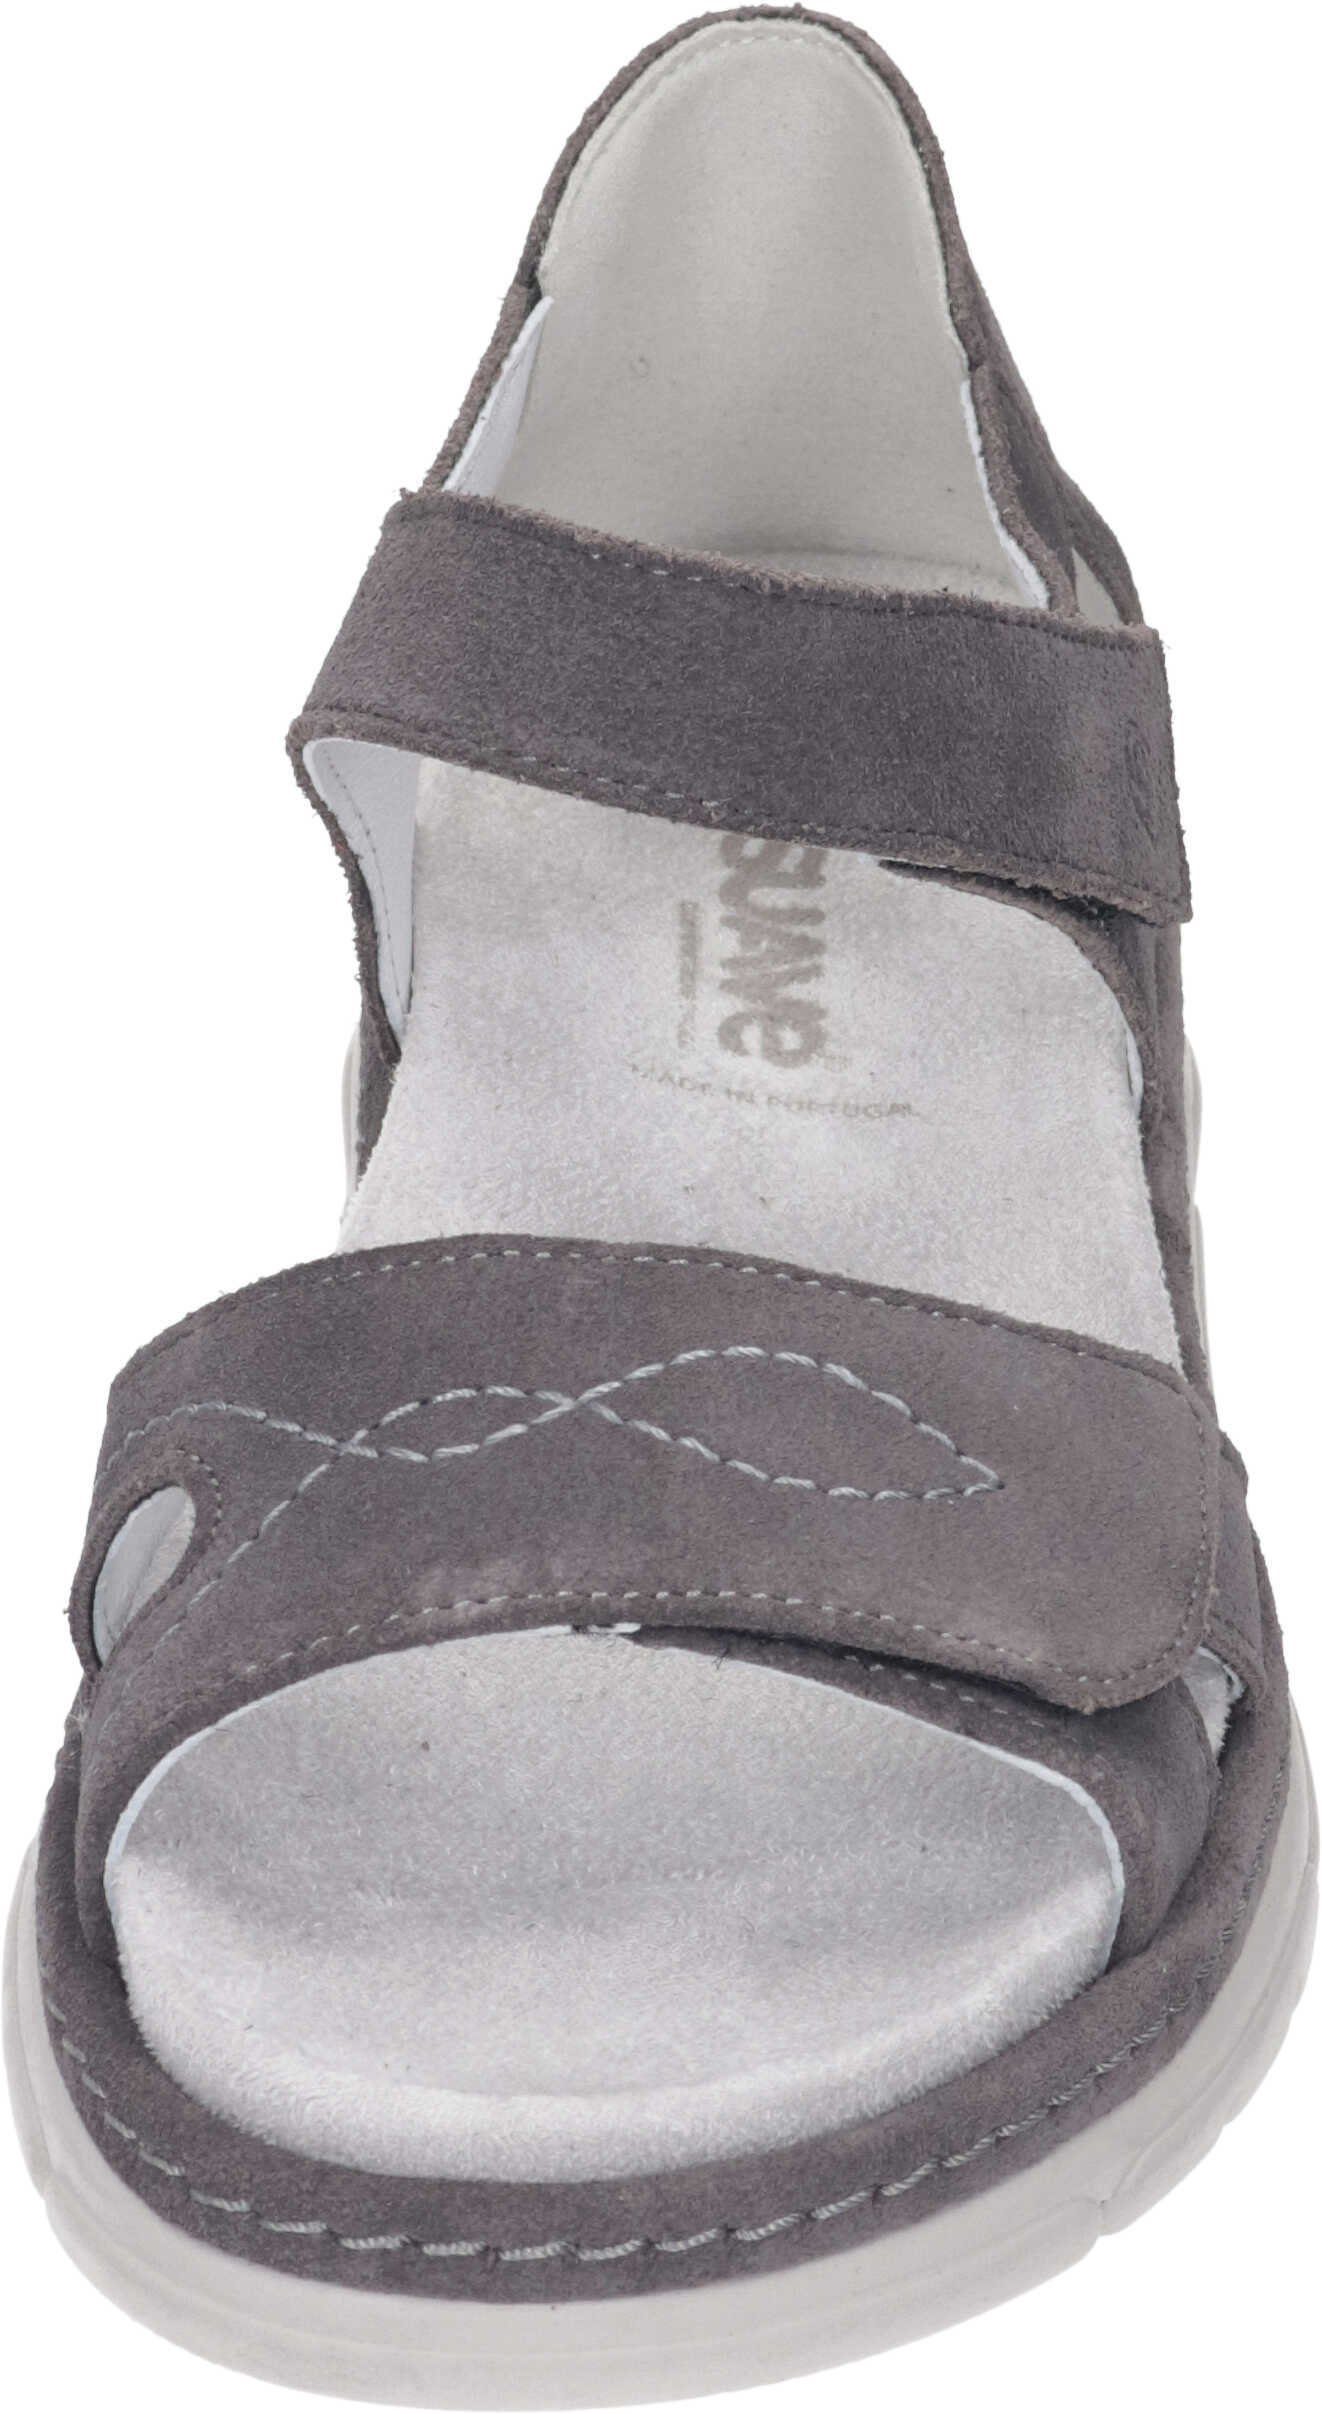 Suave Sandalen Sandalette mit Gummizug